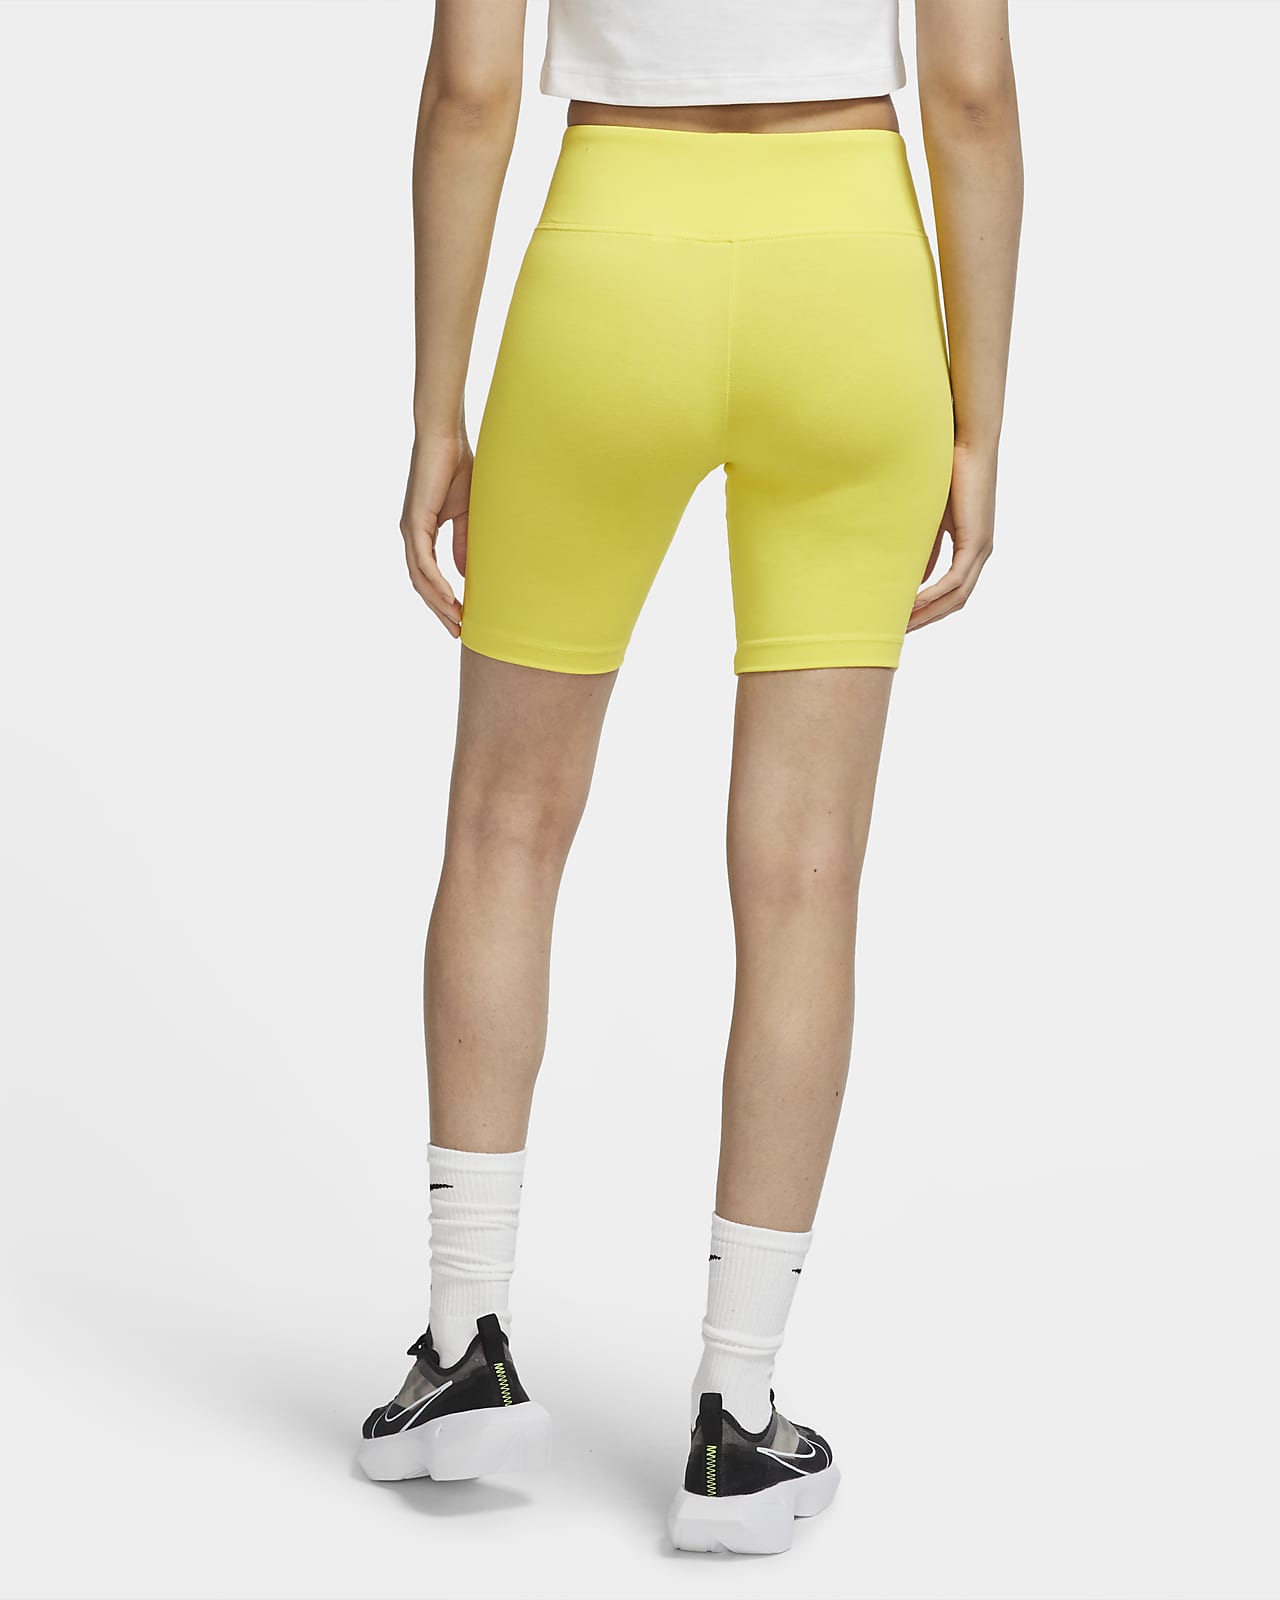 nike yellow bike shorts